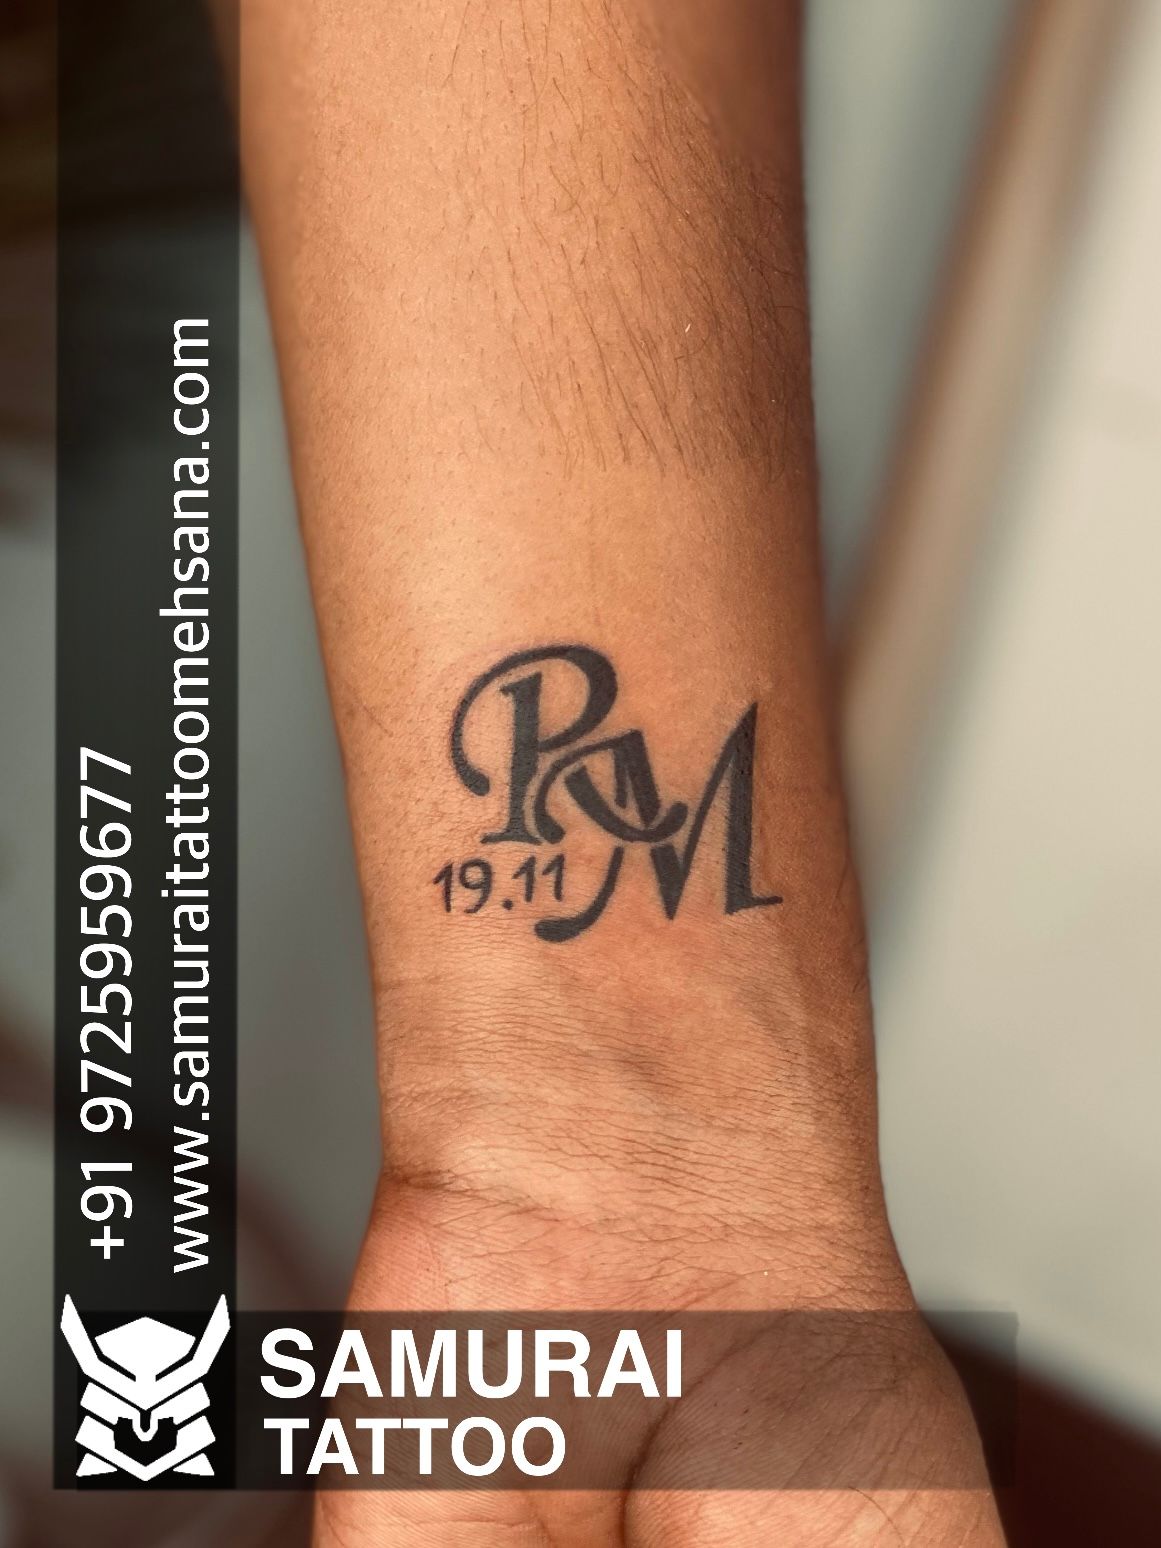 Share 63 rm tattoo designs latest  incdgdbentre